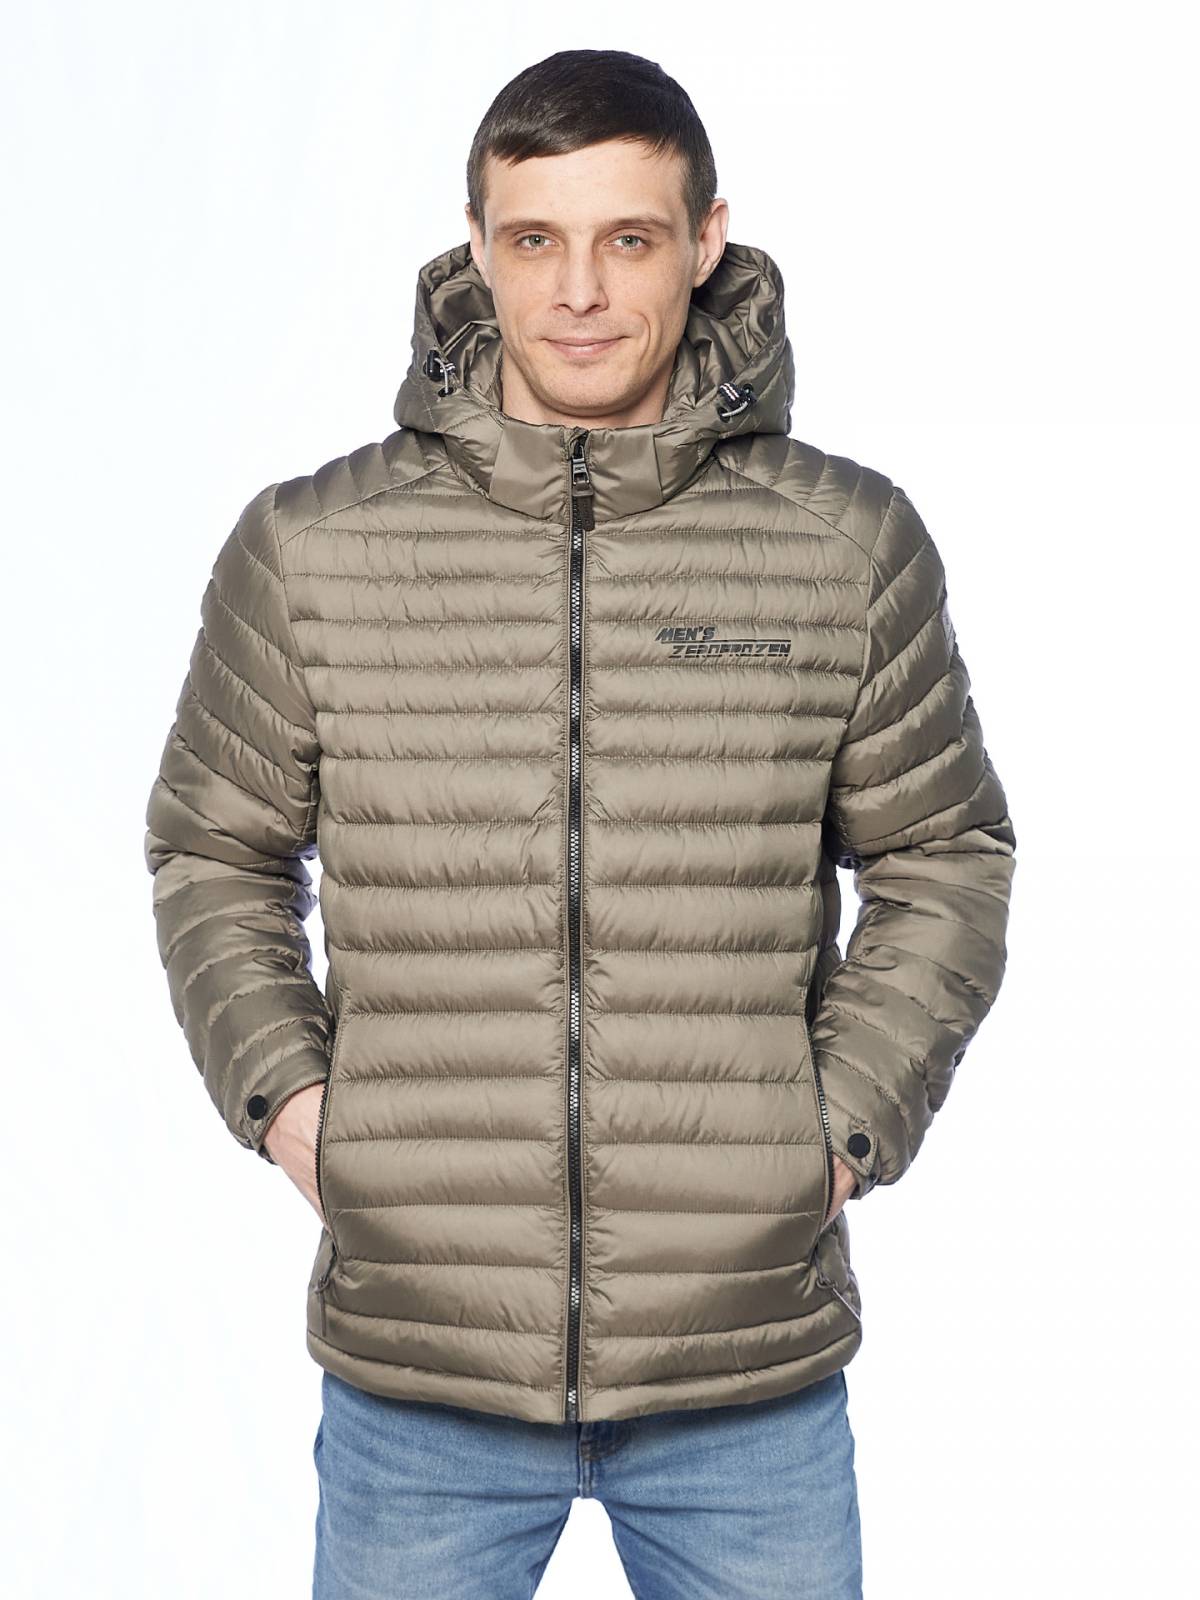 Куртка мужская Zero Frozen 4225 бежевая 54 RU